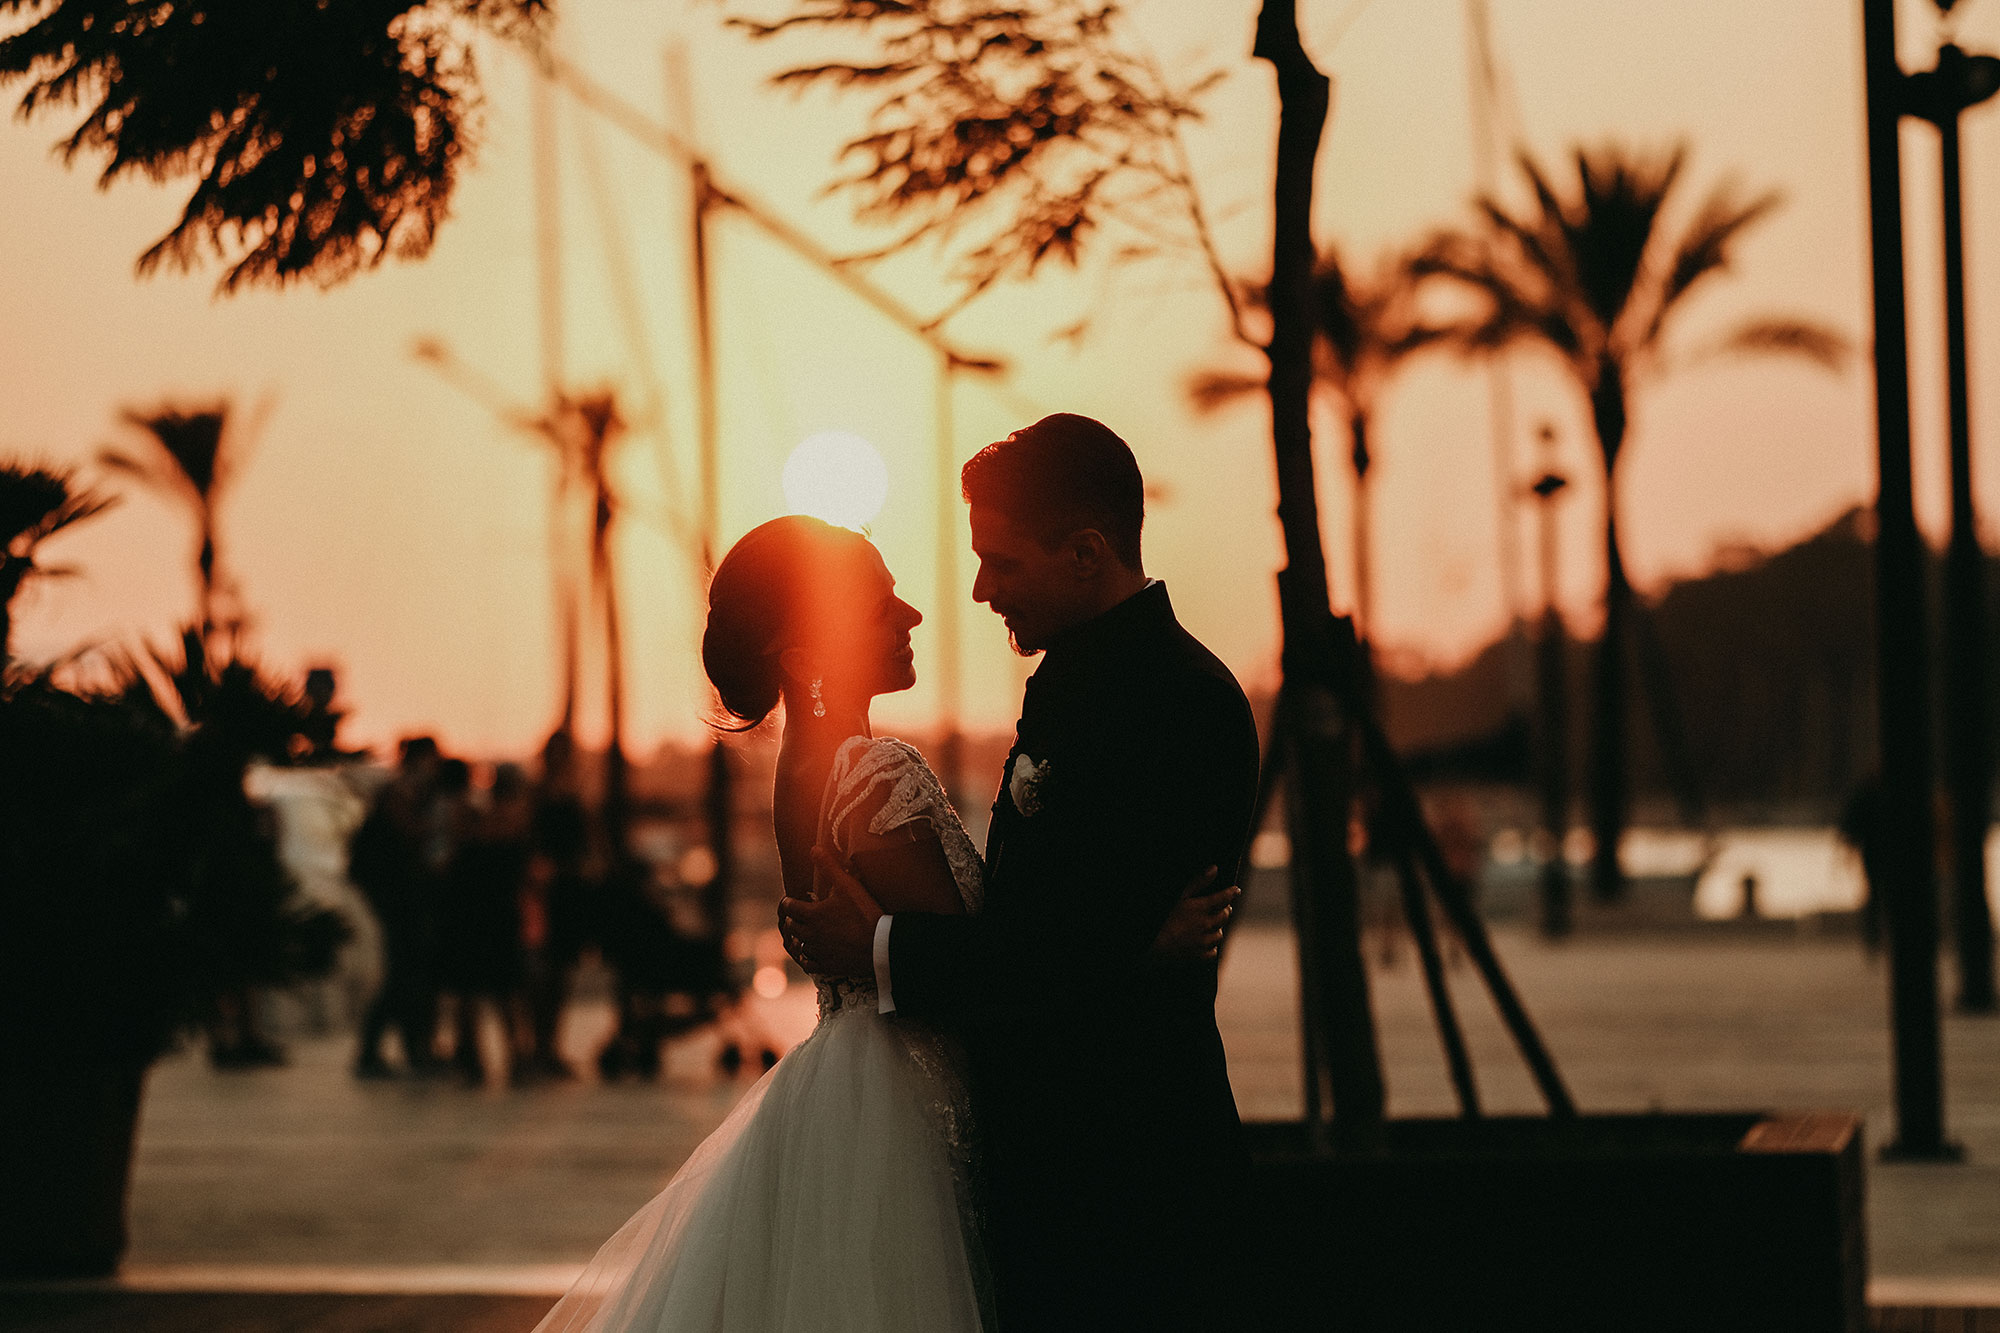 Wedding photoshoot tips and tricks